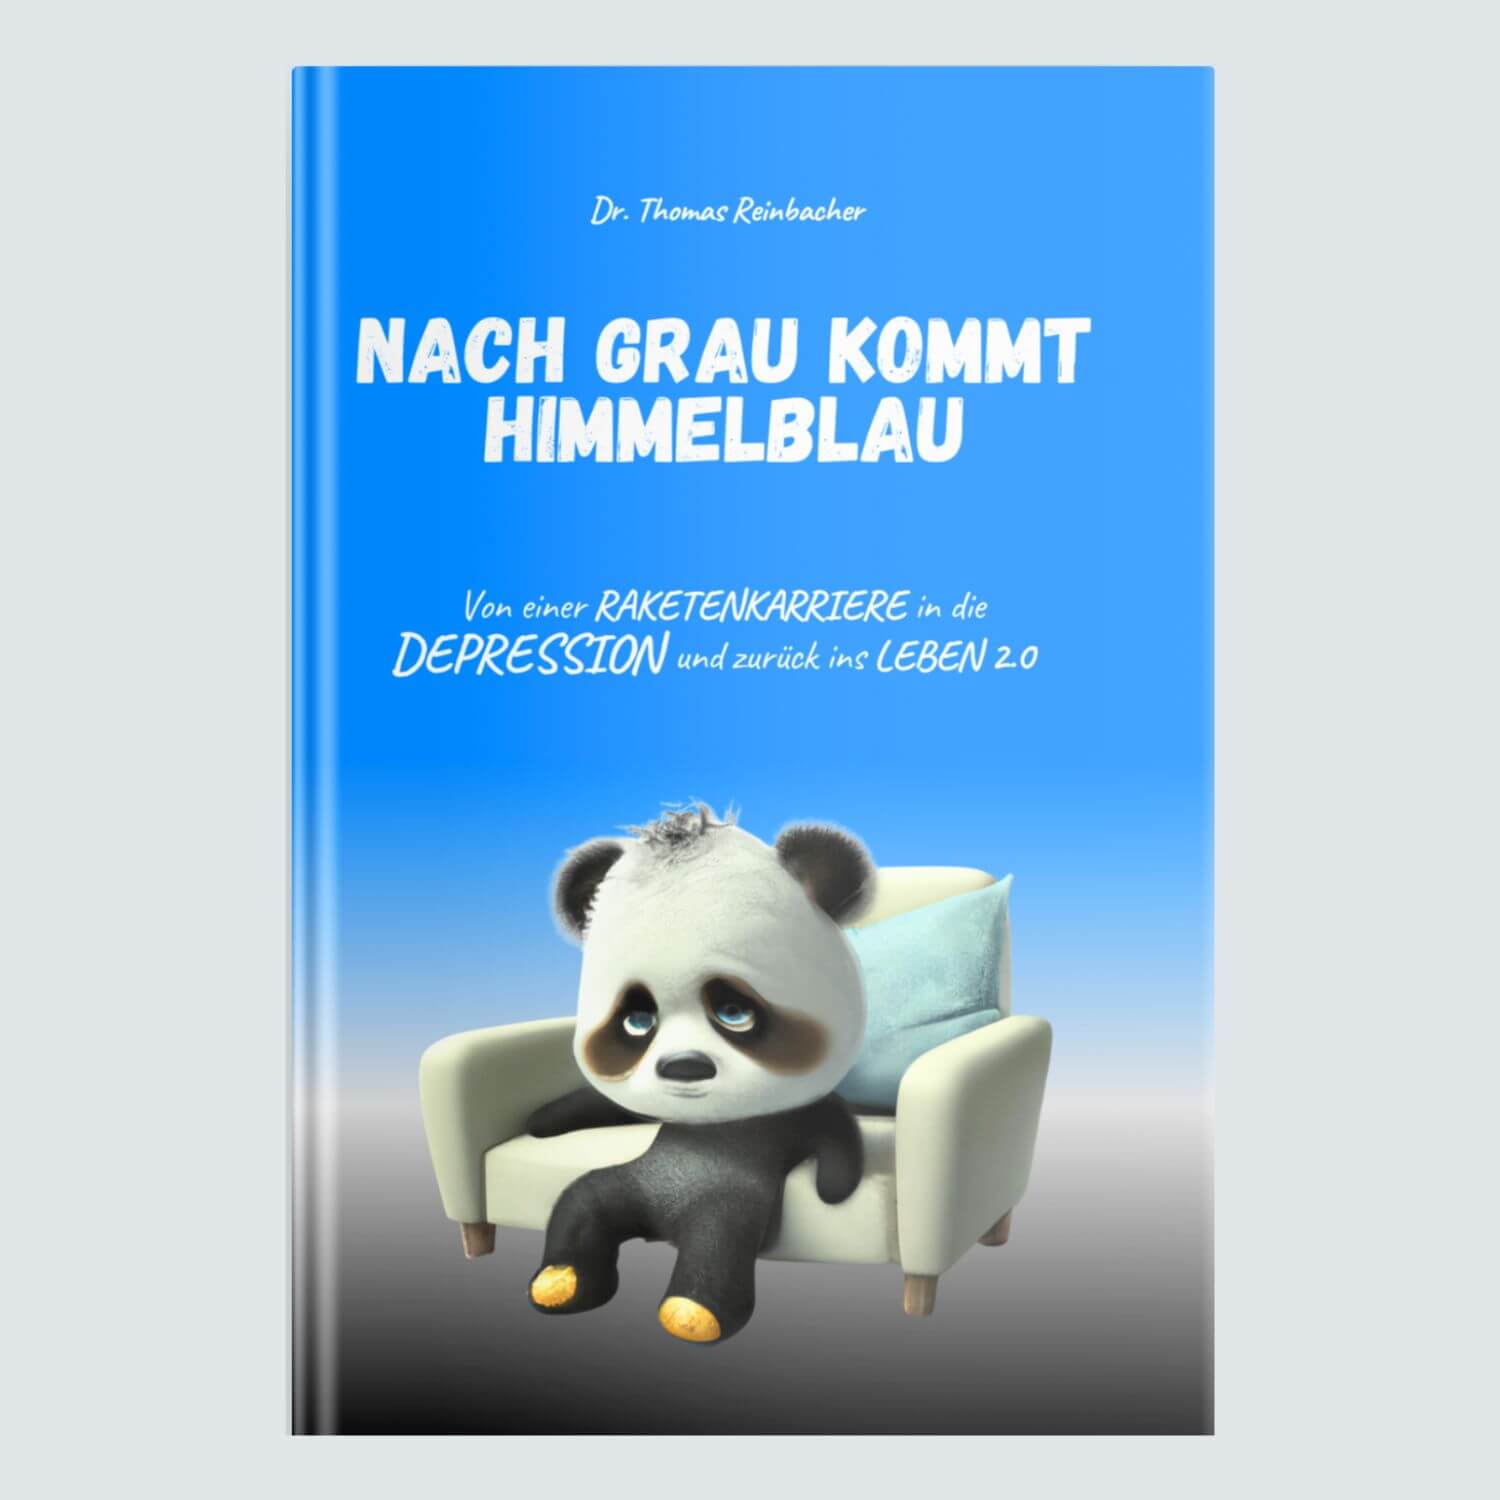 Nach Grau kommt Himmelblau (Hardcover)